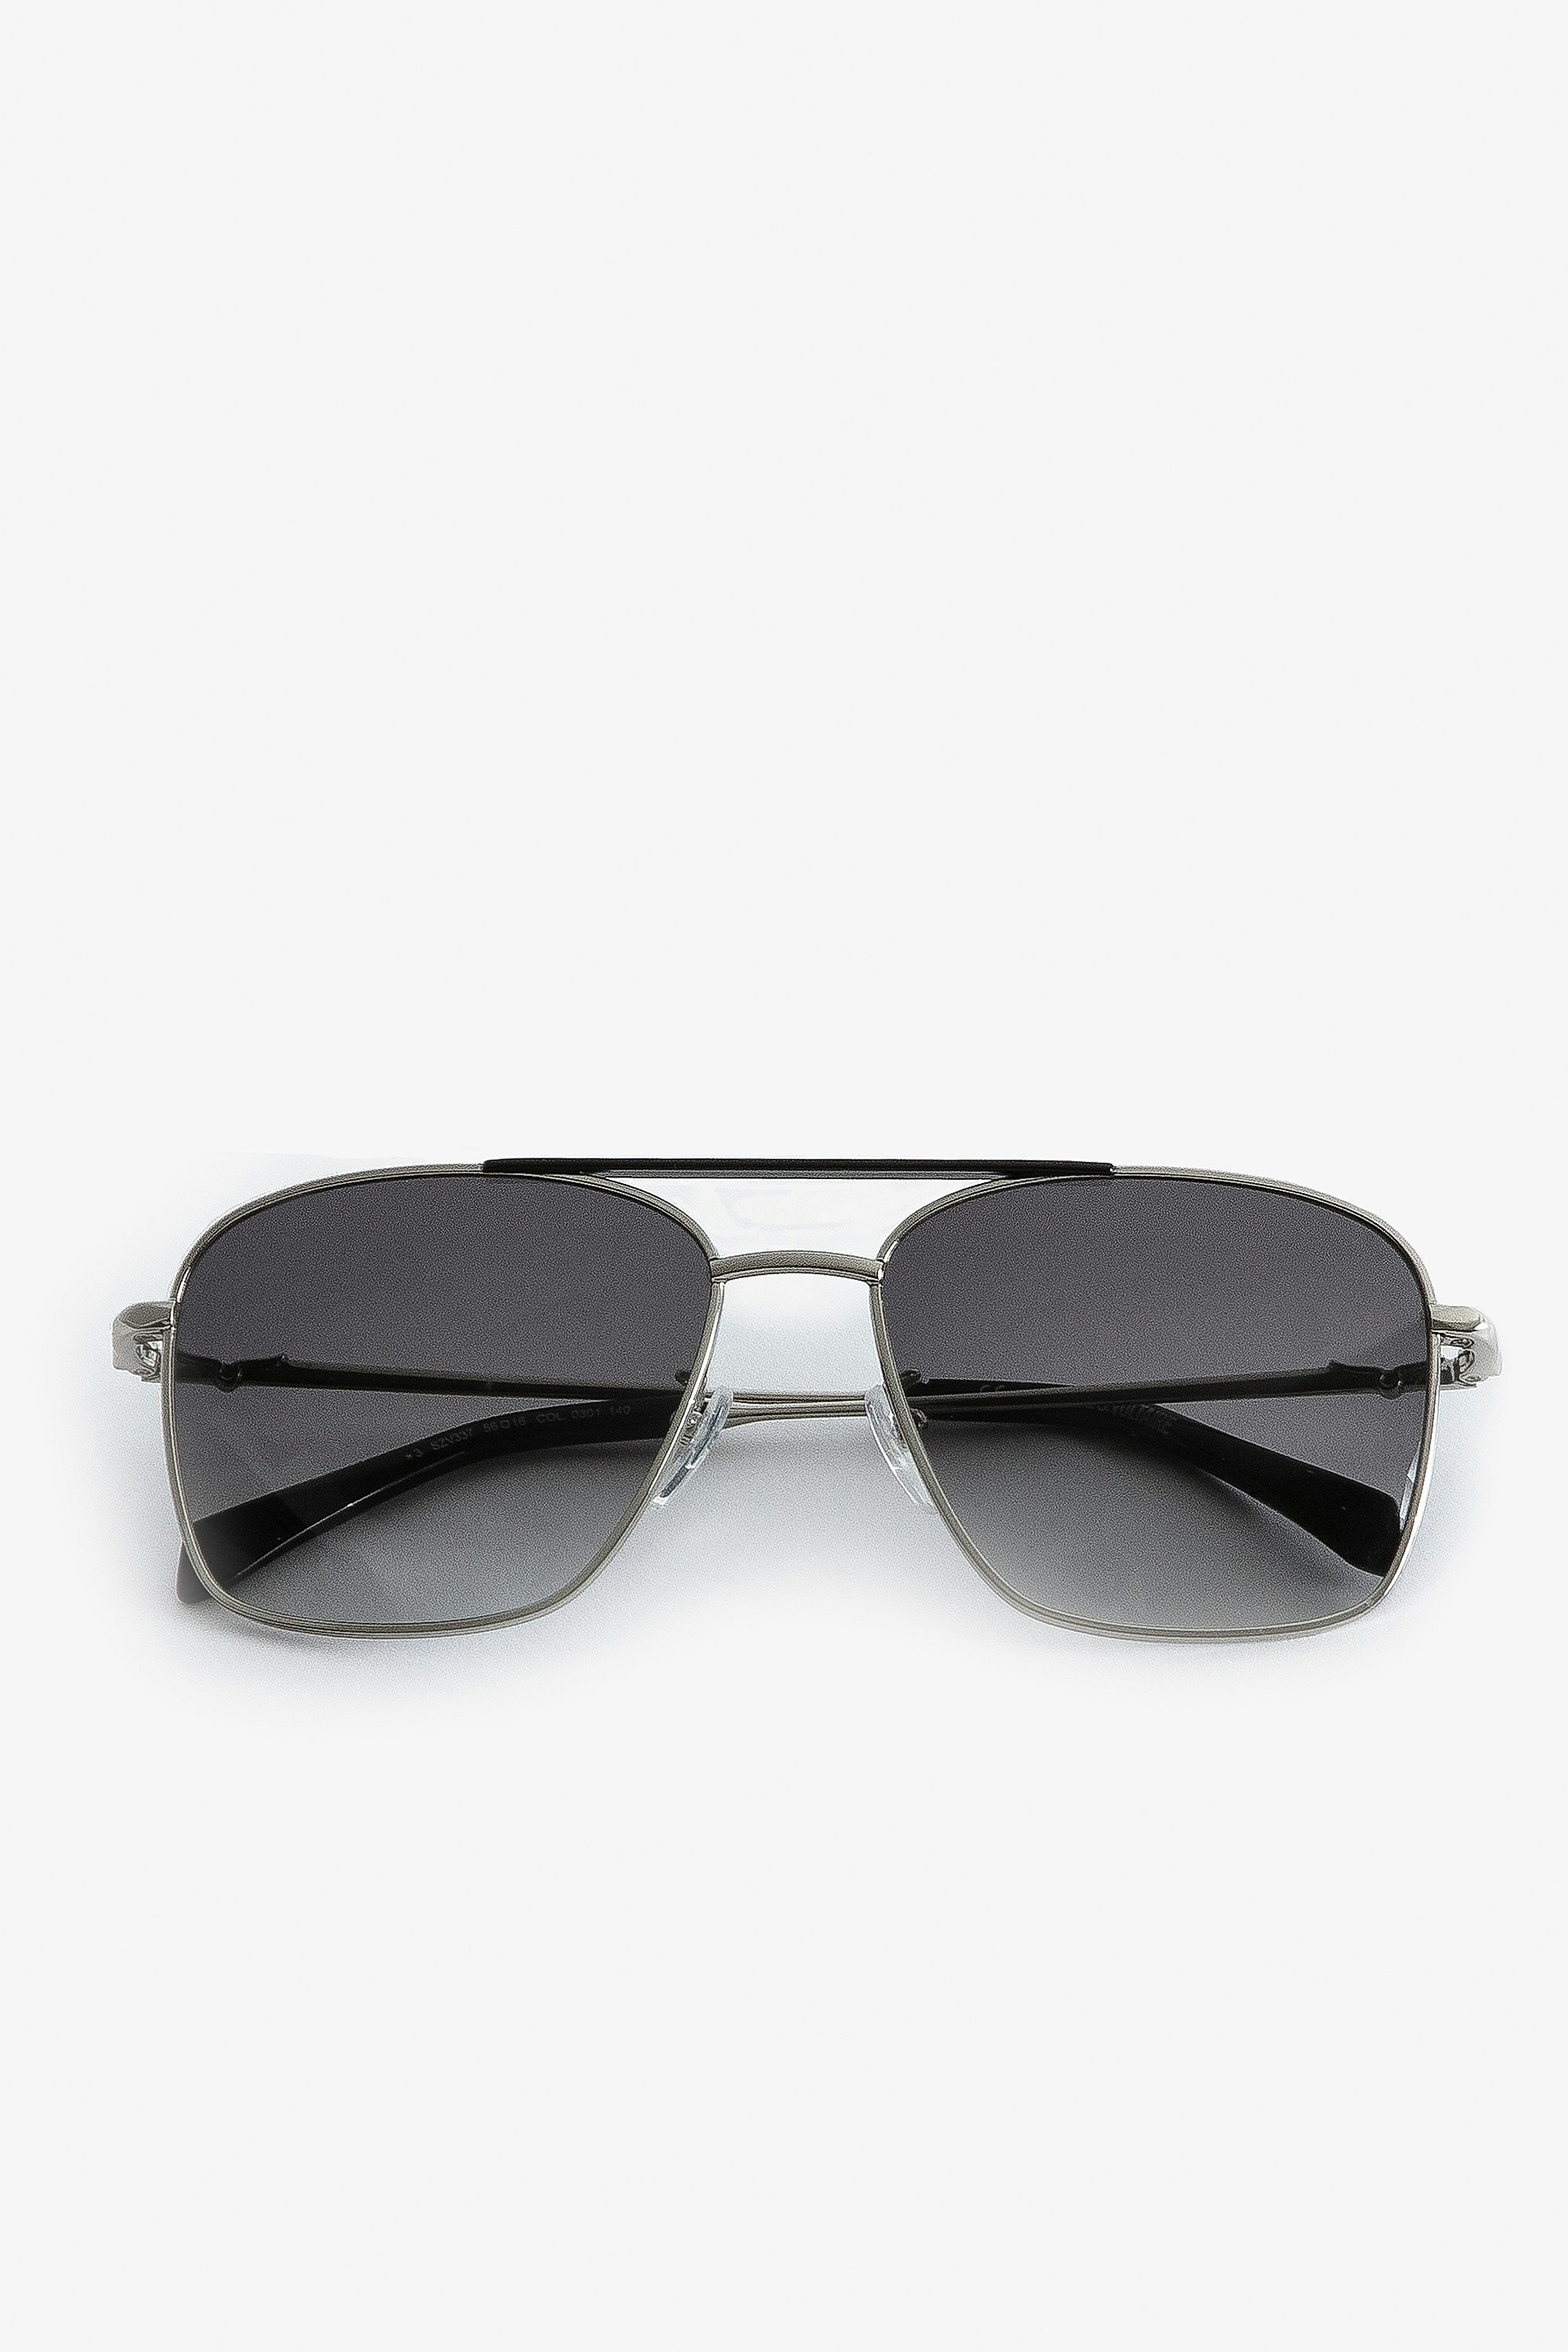 Aviator Wings Sunglasses - Unisex aviator sunglasses in black metal with smoke lenses.